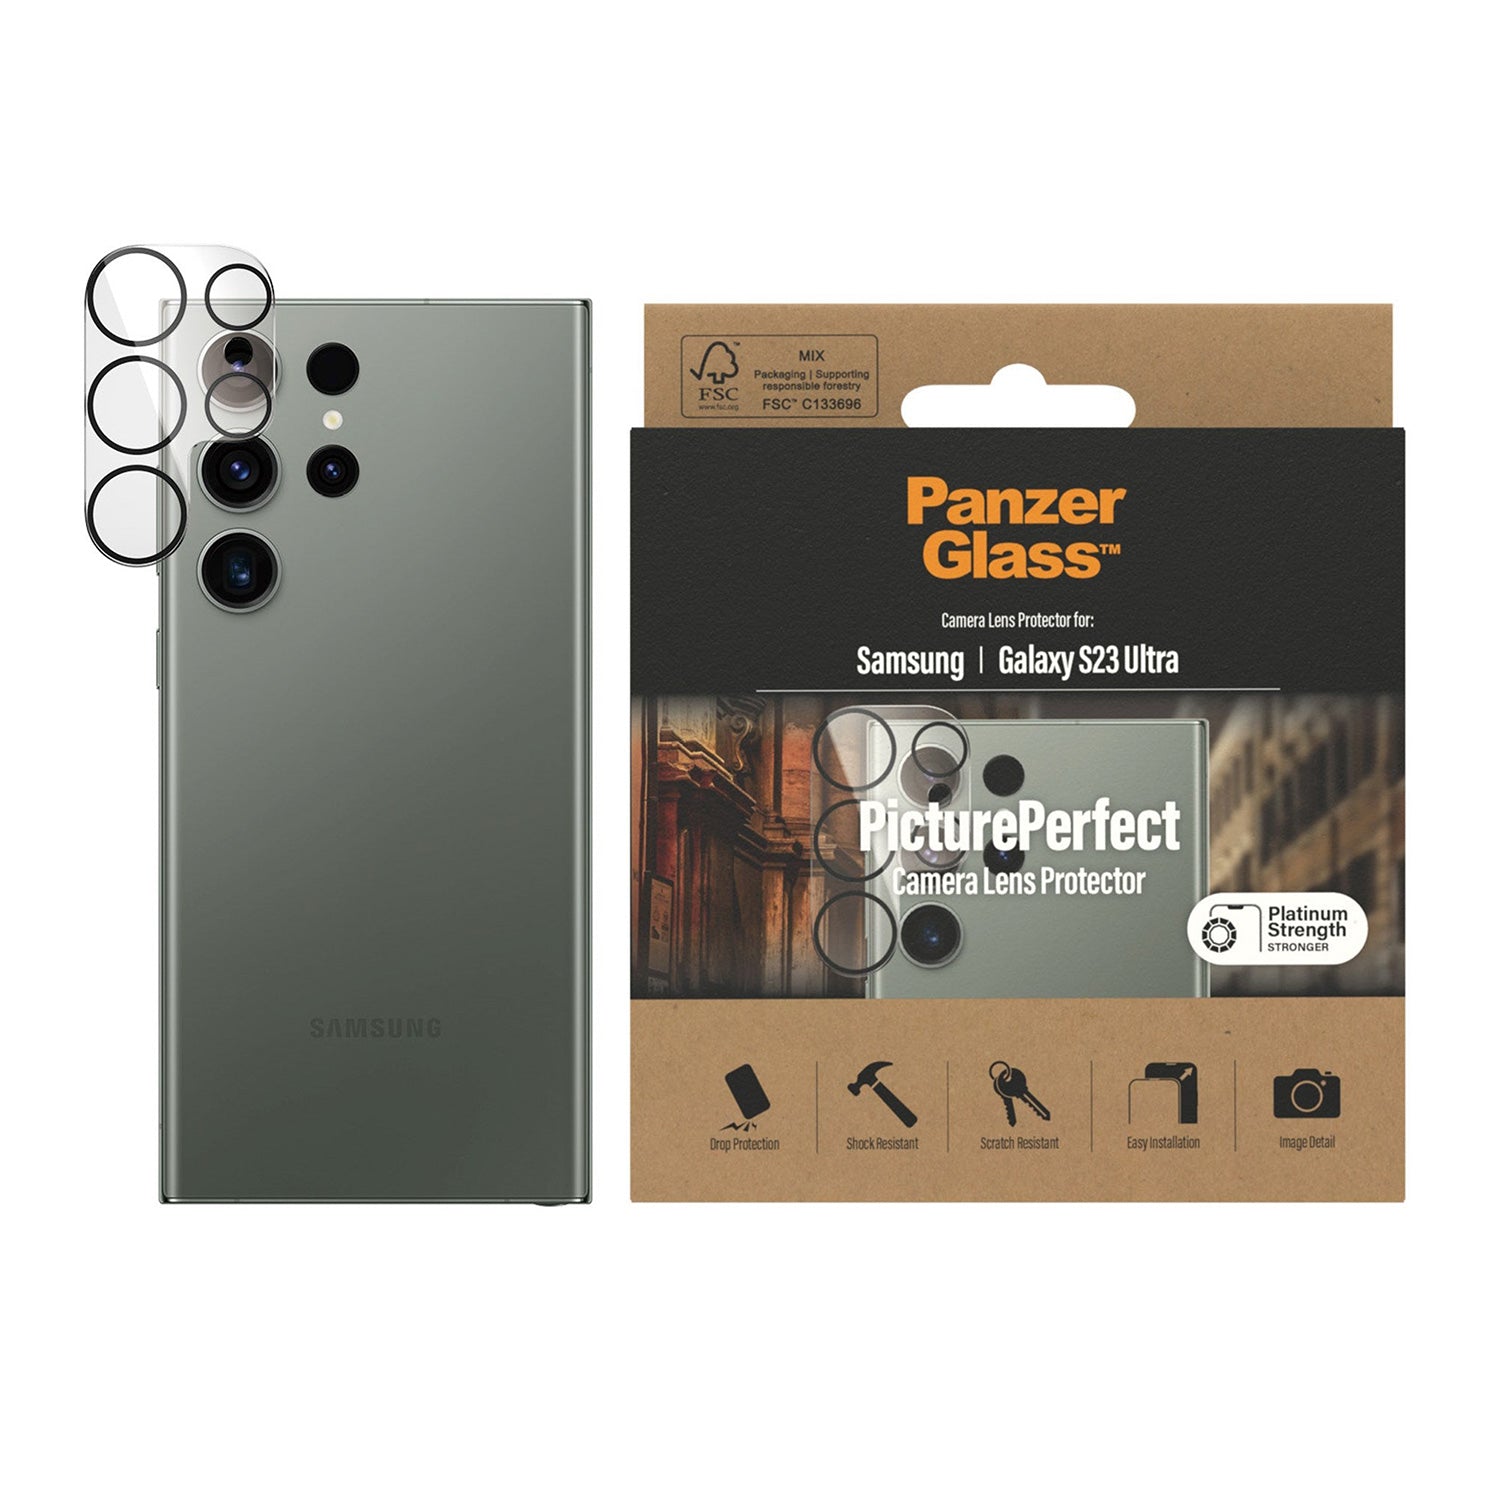 PanzerGlass Samsung Galaxy S23 Ultra PicturePerfect Camera Protector